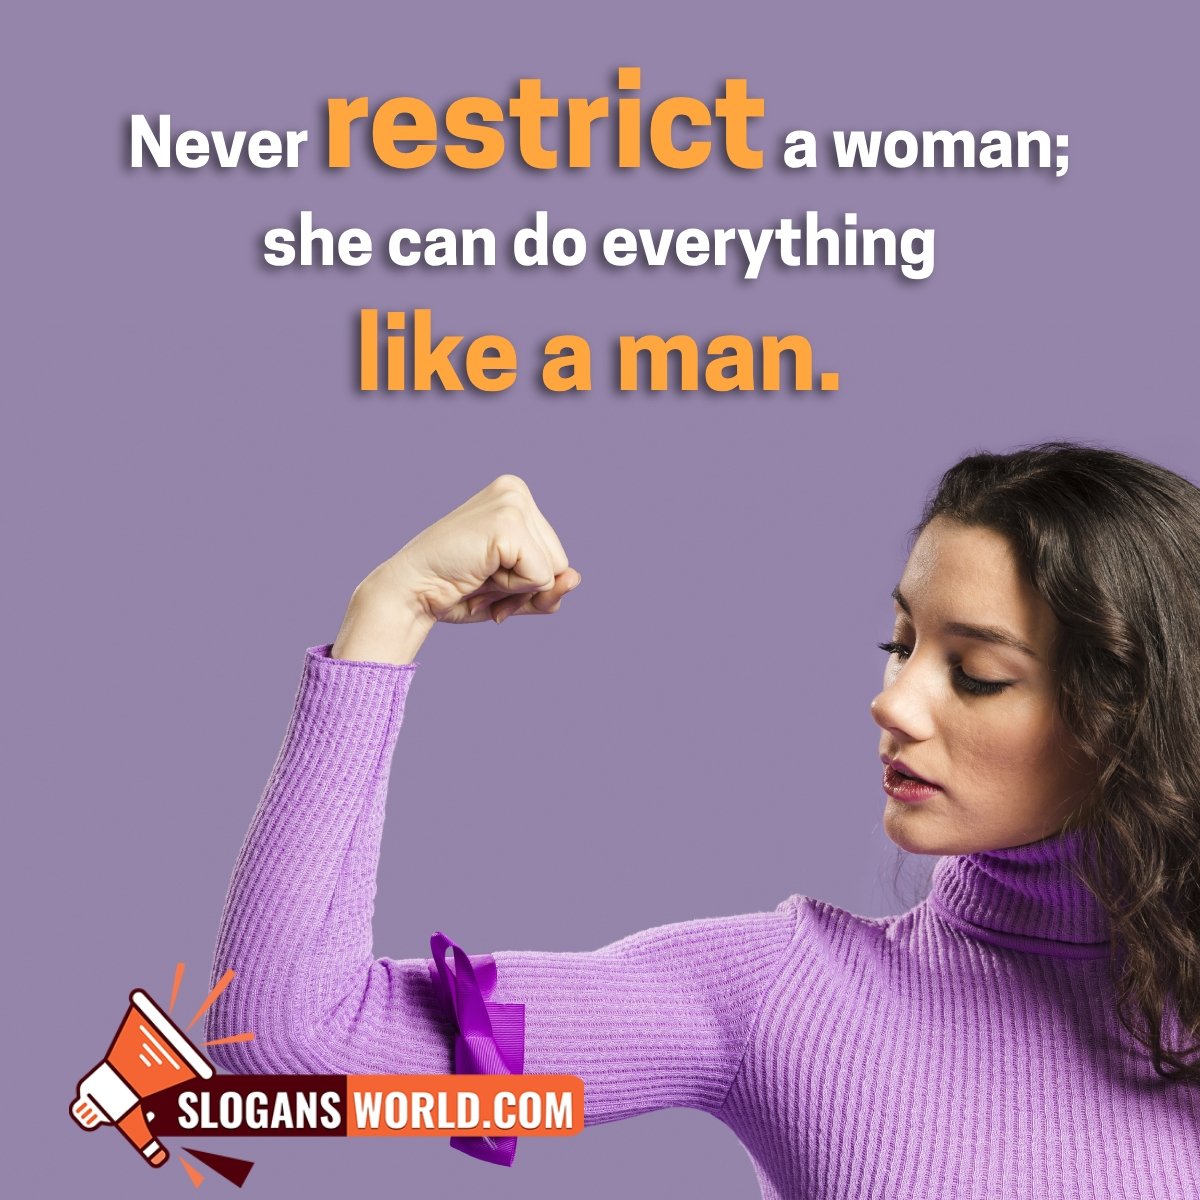 Women Empowerment Slogans